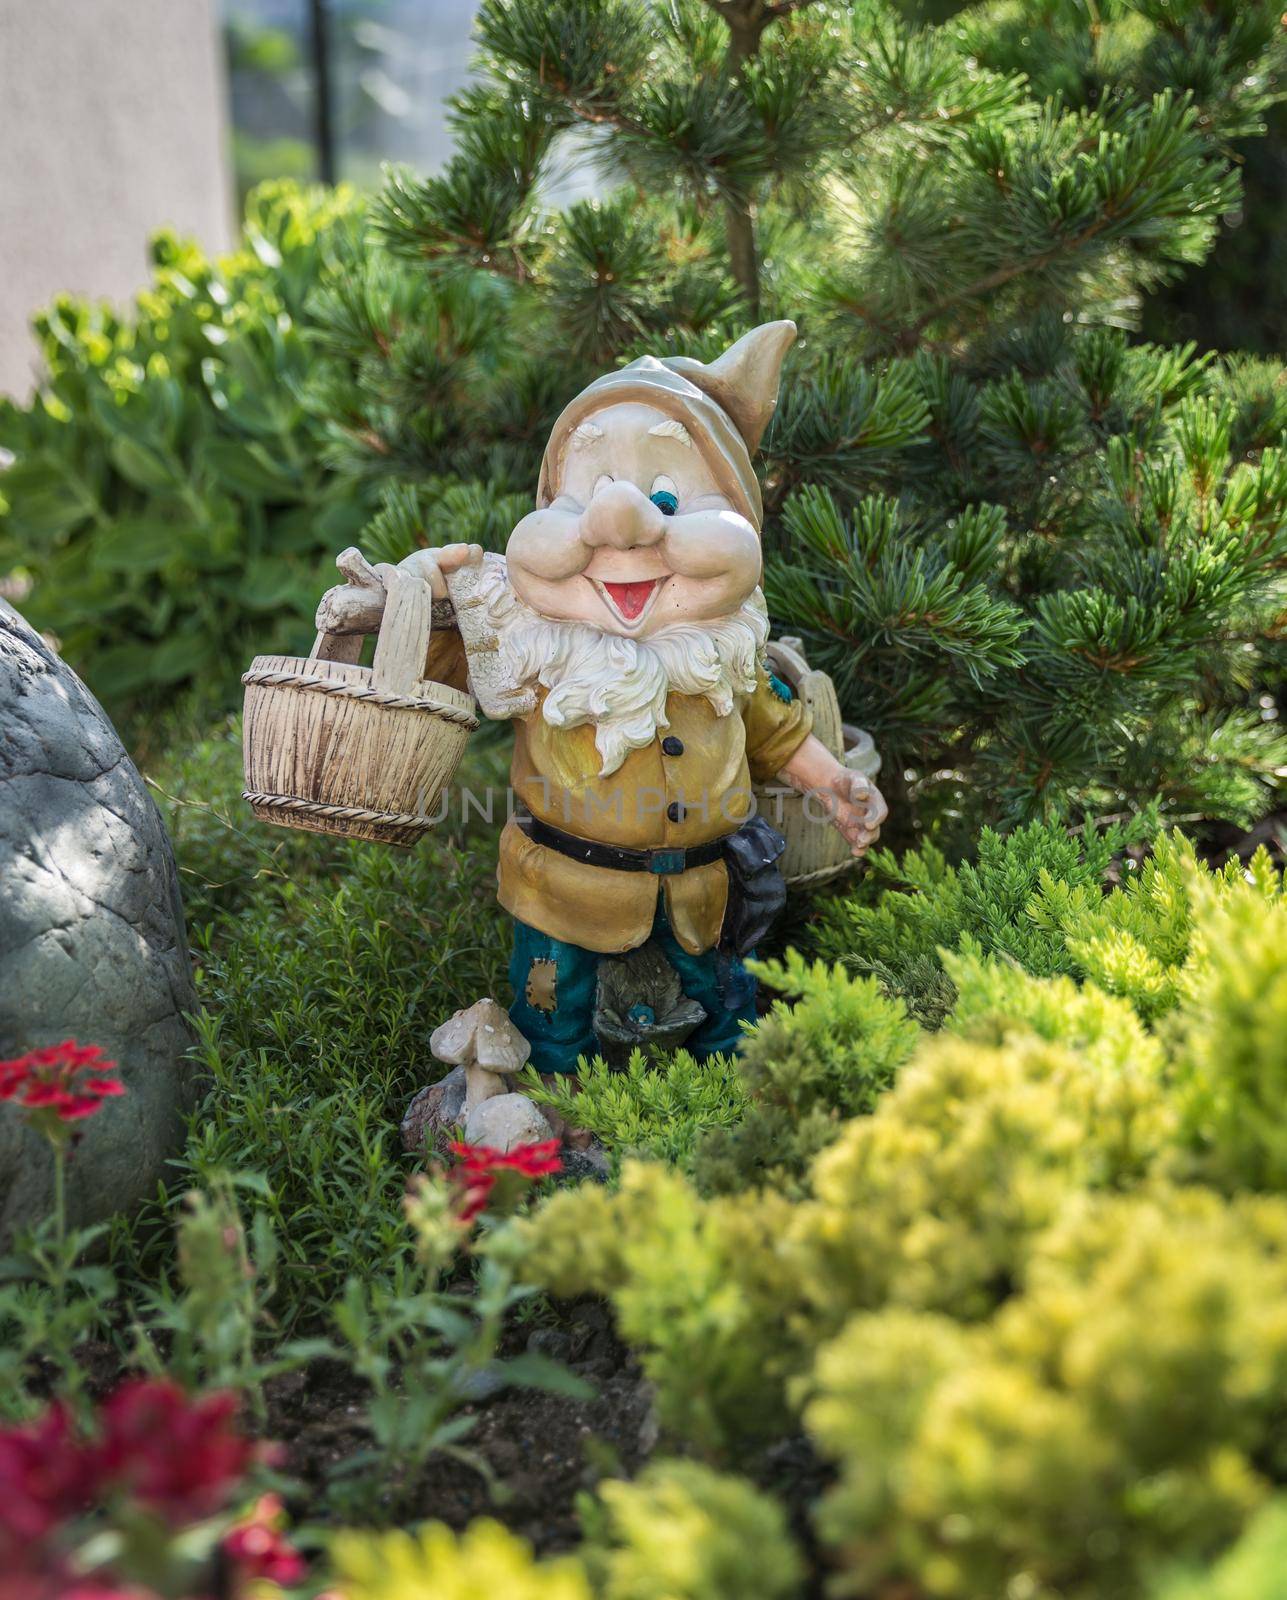 Funny garden dwarf standing among nice flowers